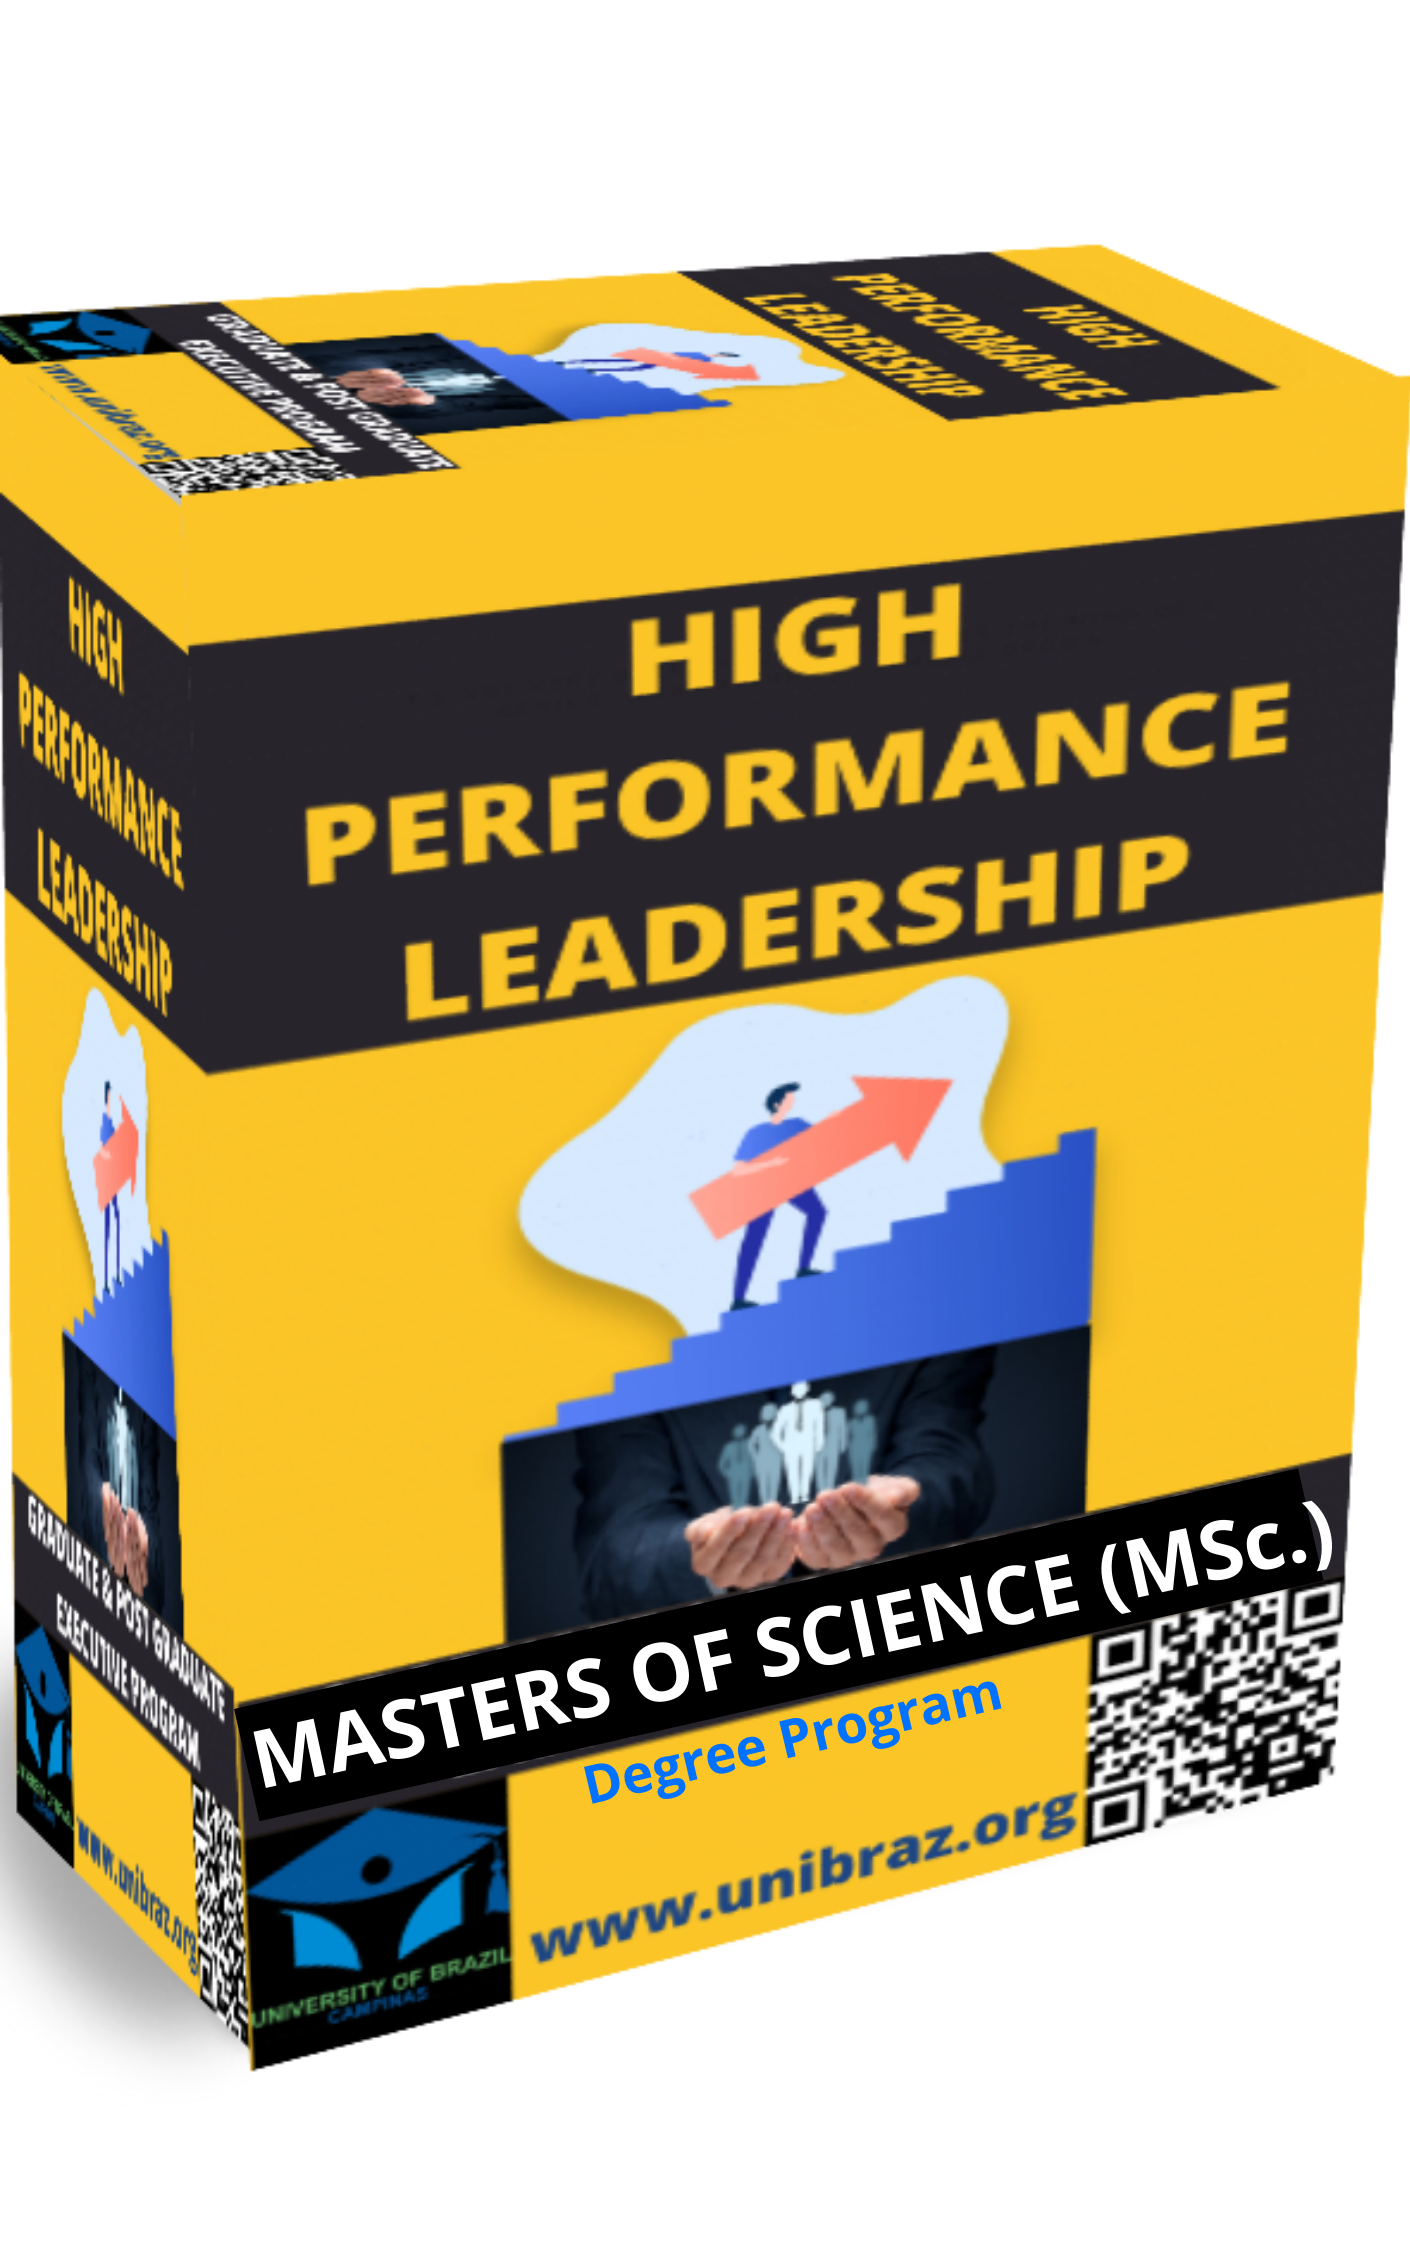 MASTERS OF SCIENCE (MSc.) HIGH PERFORMANCE LEADERSHIP